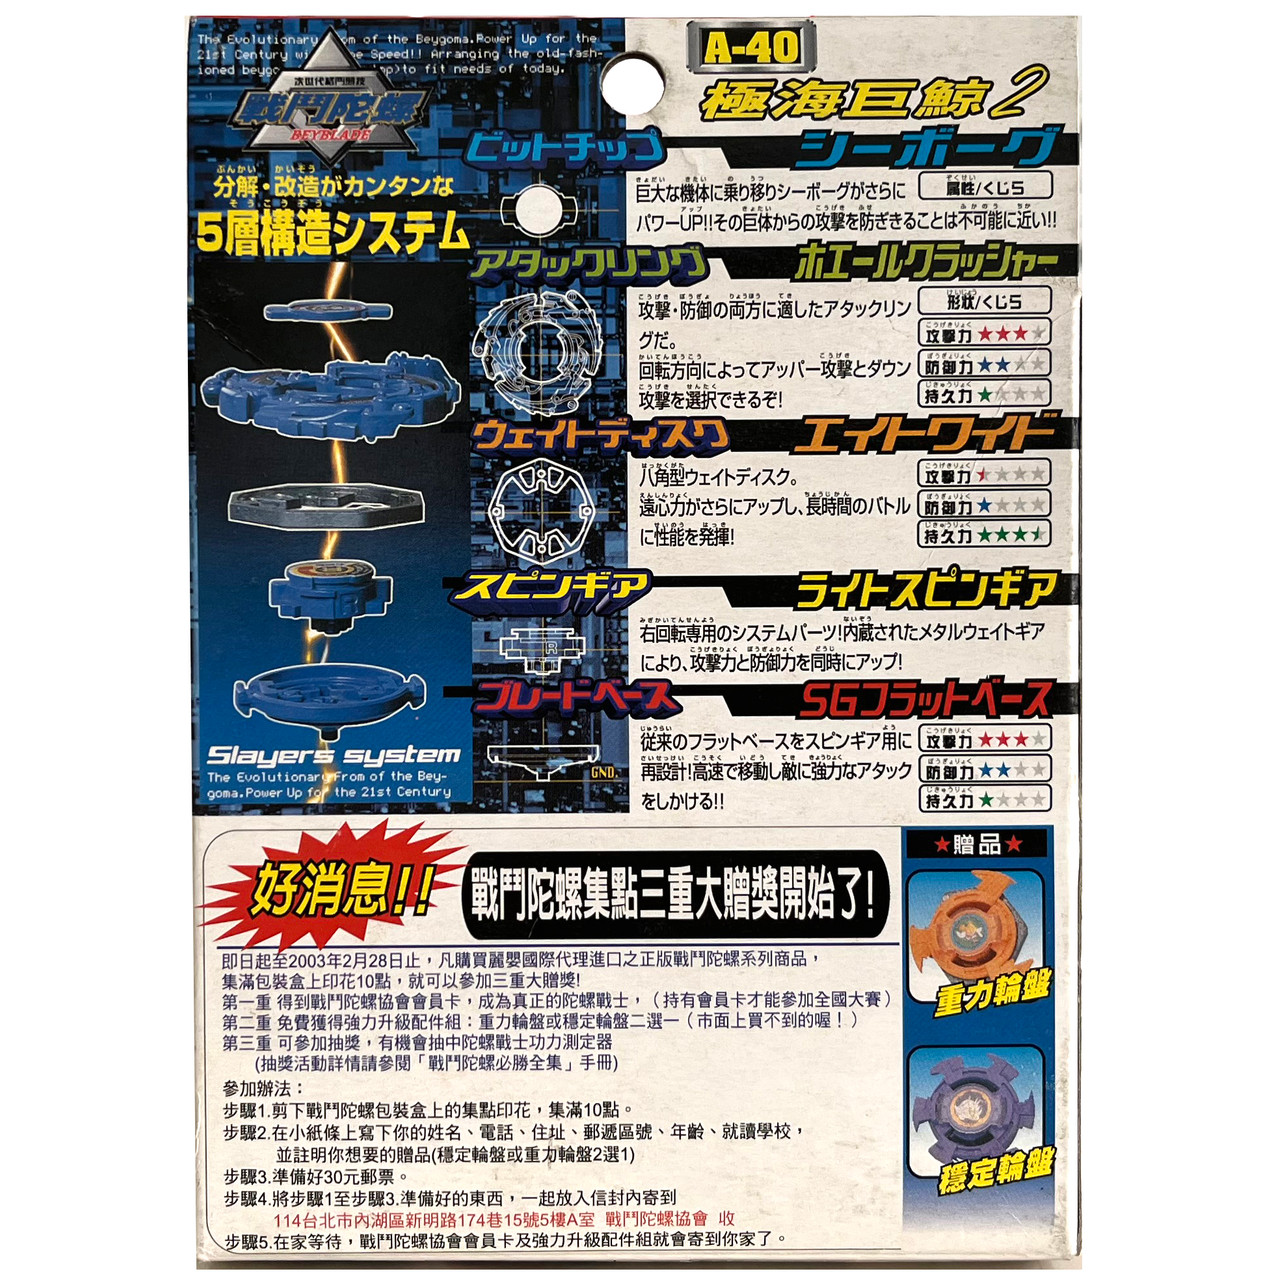 Takara Tomy A-36 Wyborg, Beyblade Original Series